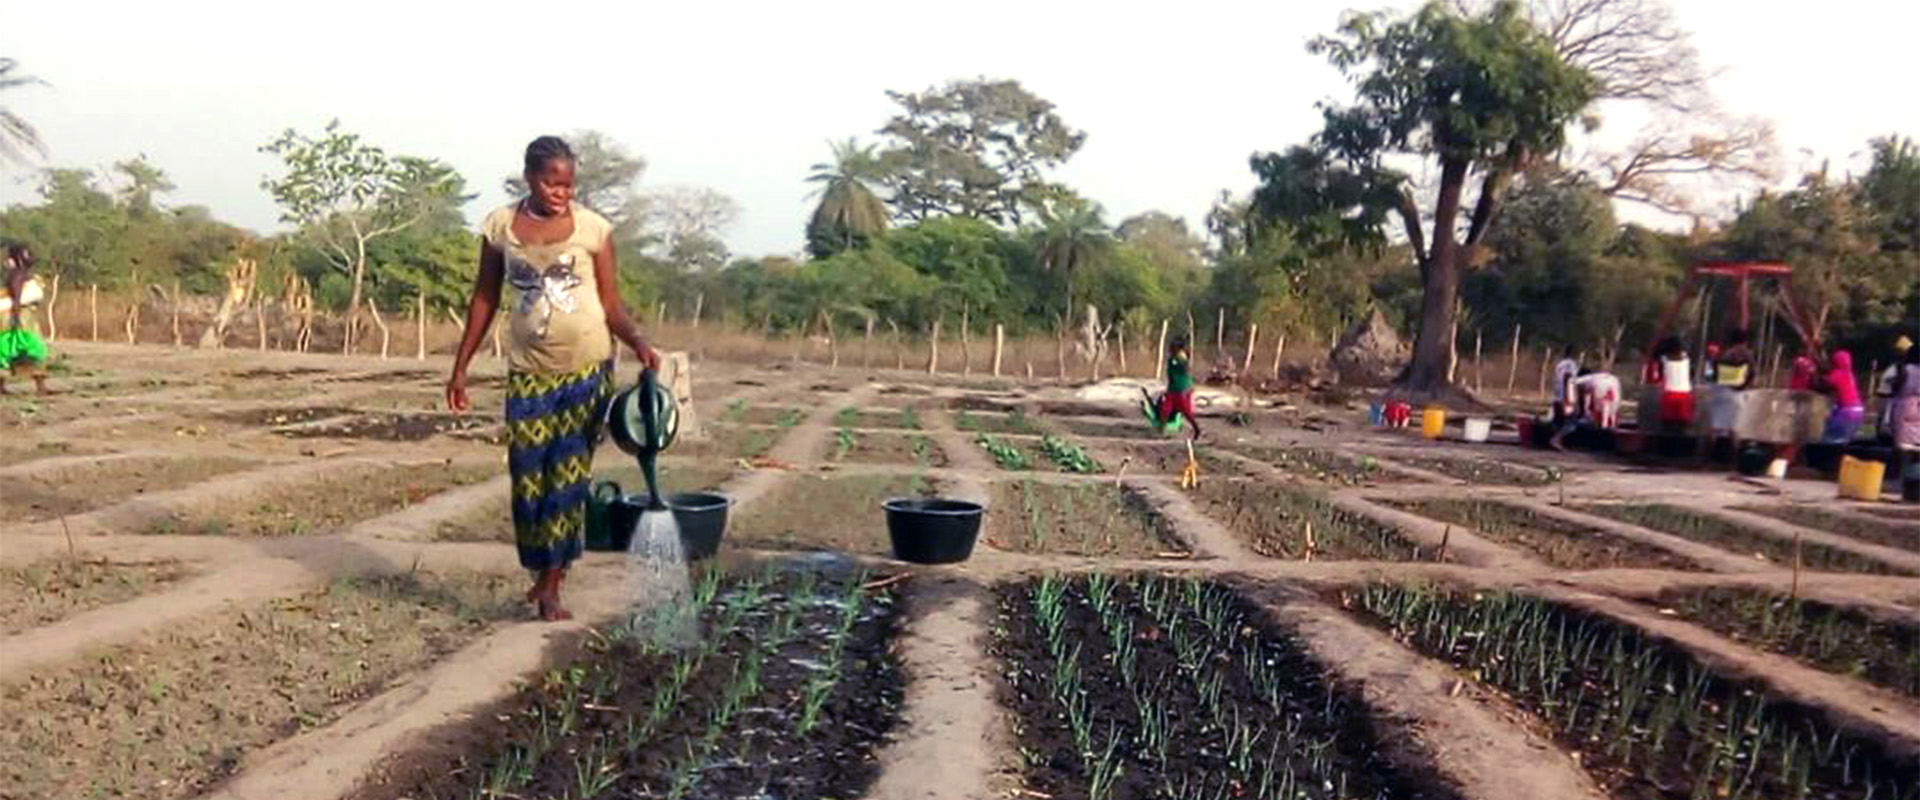 irrigazione orto barracabiro donna Guinea Bissau Mani Tese 2018